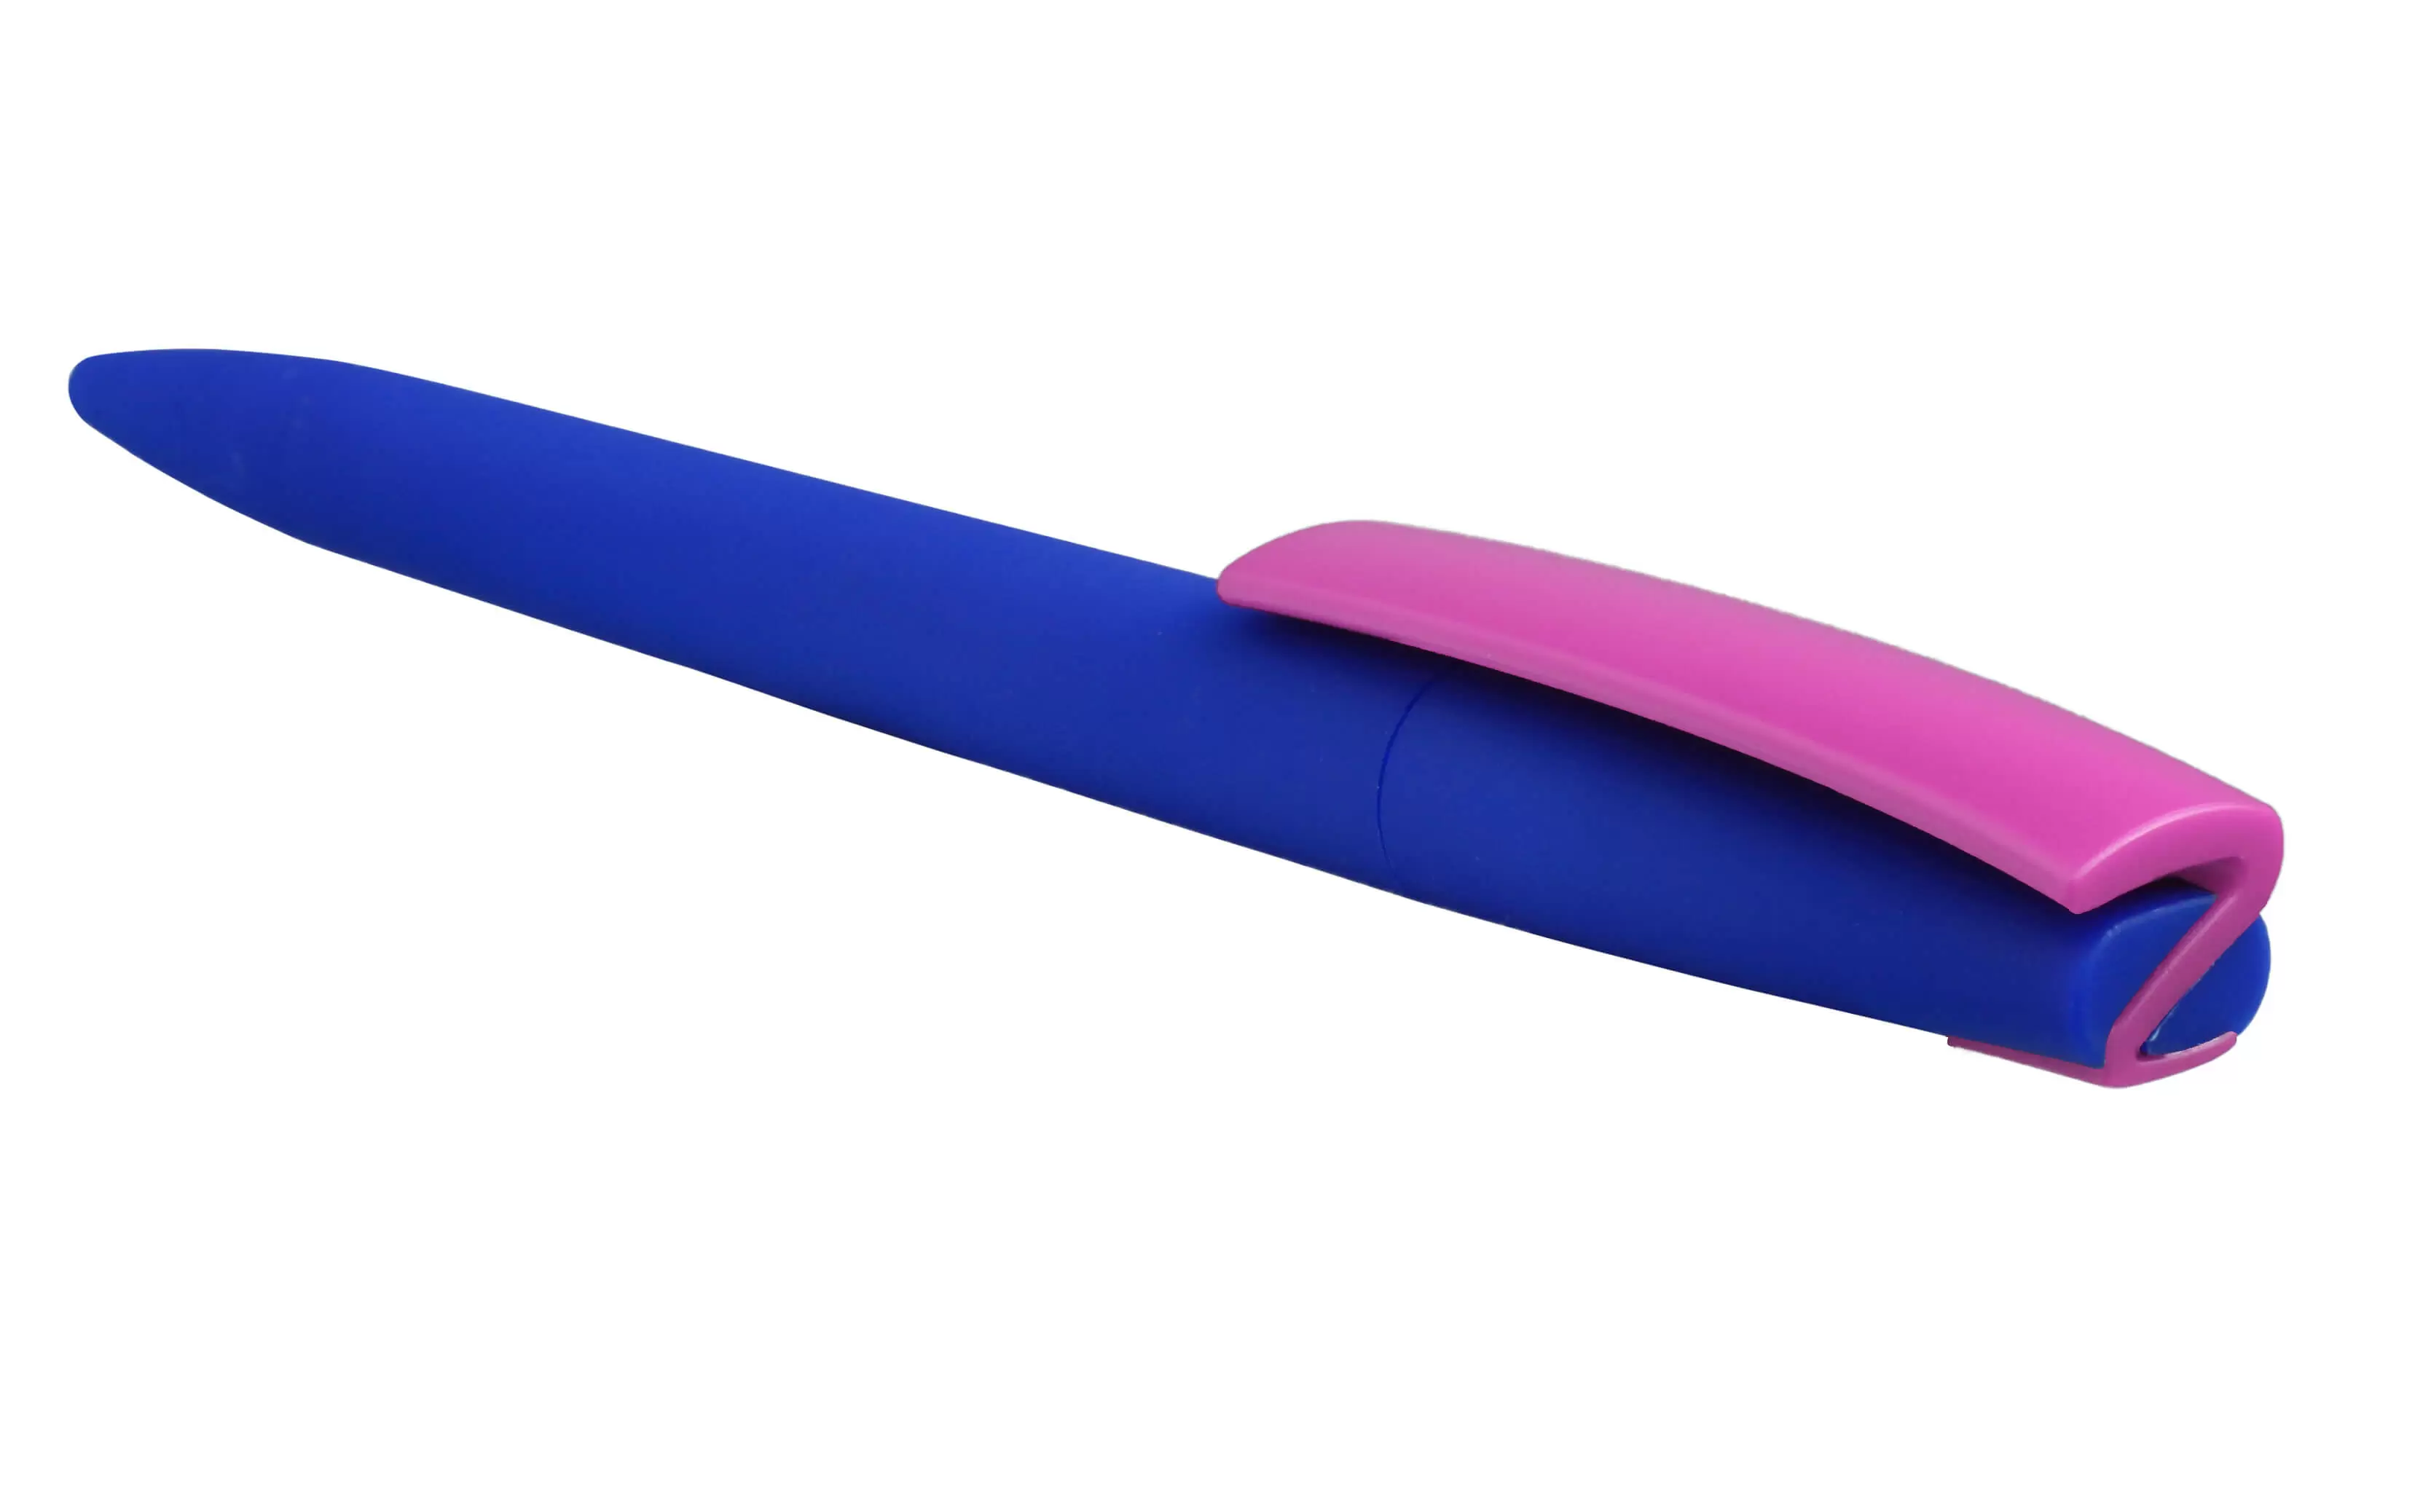 Ручка ZETA SOFT MIX Синяя с розовым 1024.01.10